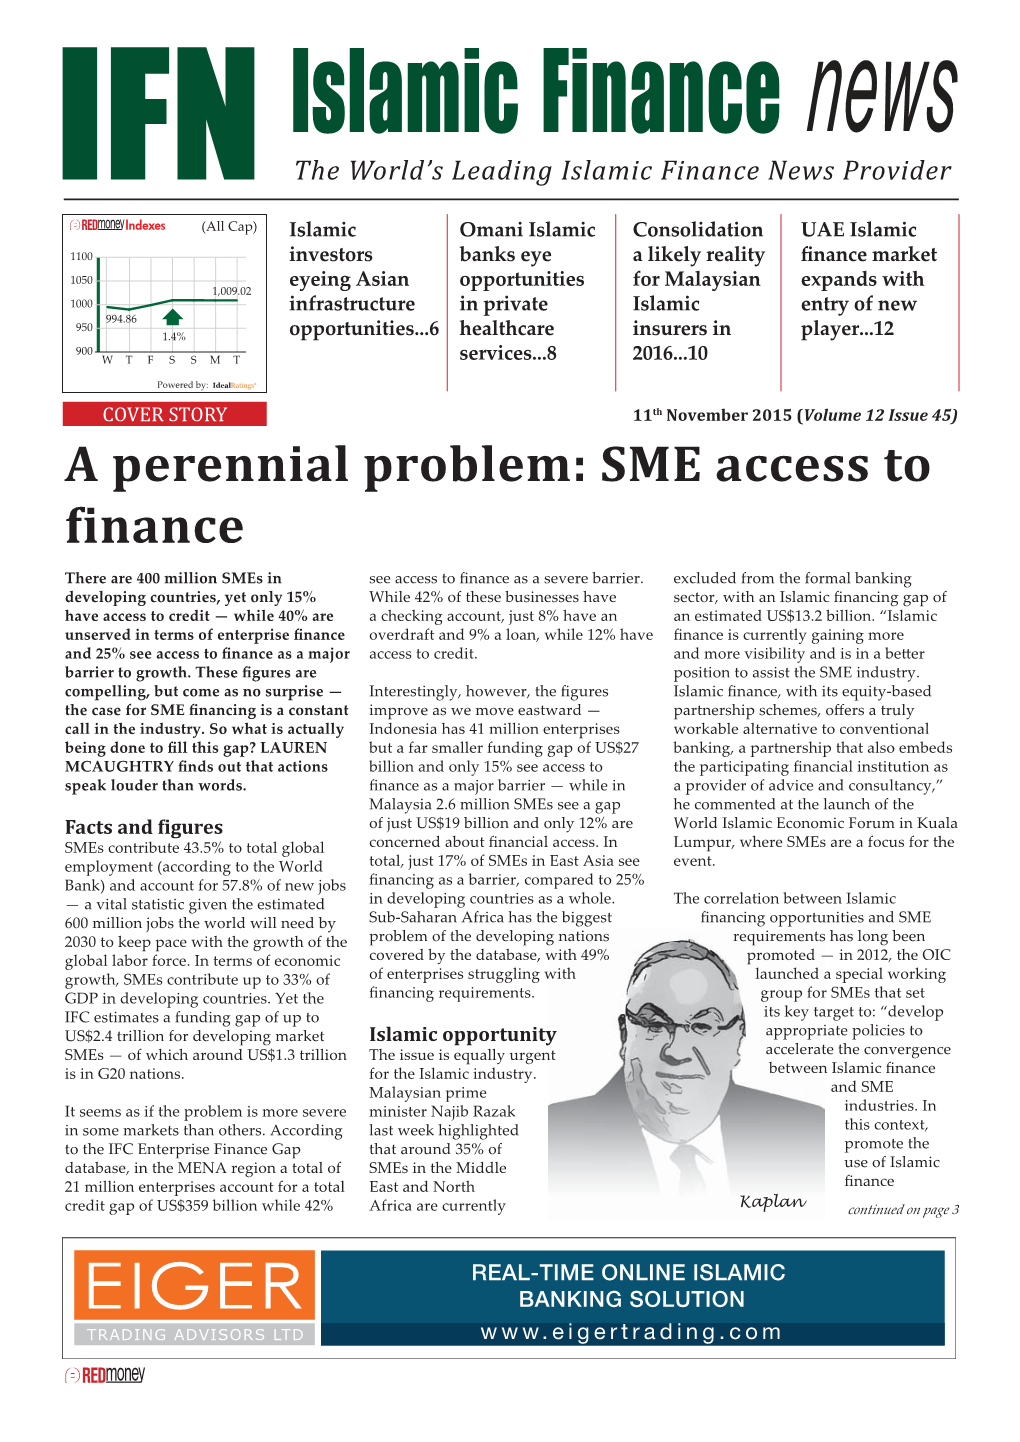 A Perennial Problem: SME Access to Finance